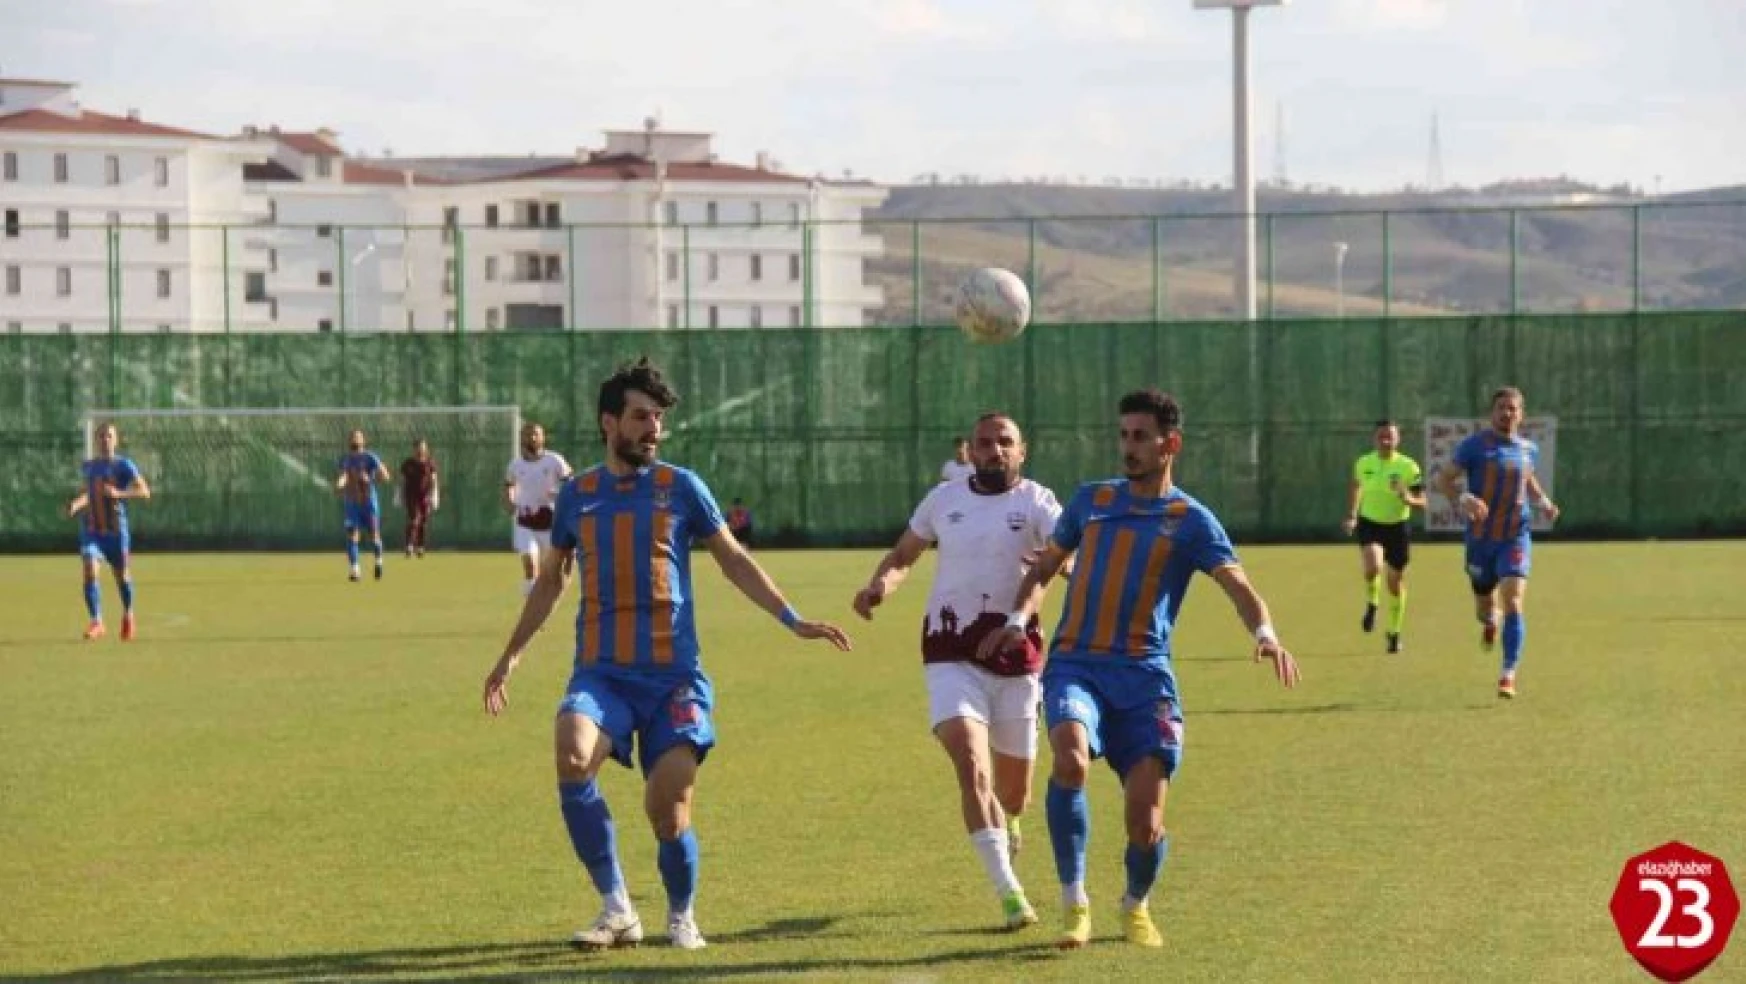 TFF 3. Lig: 23 Elazığ FK: 1 - A. Eynesil Belediyespor: 0